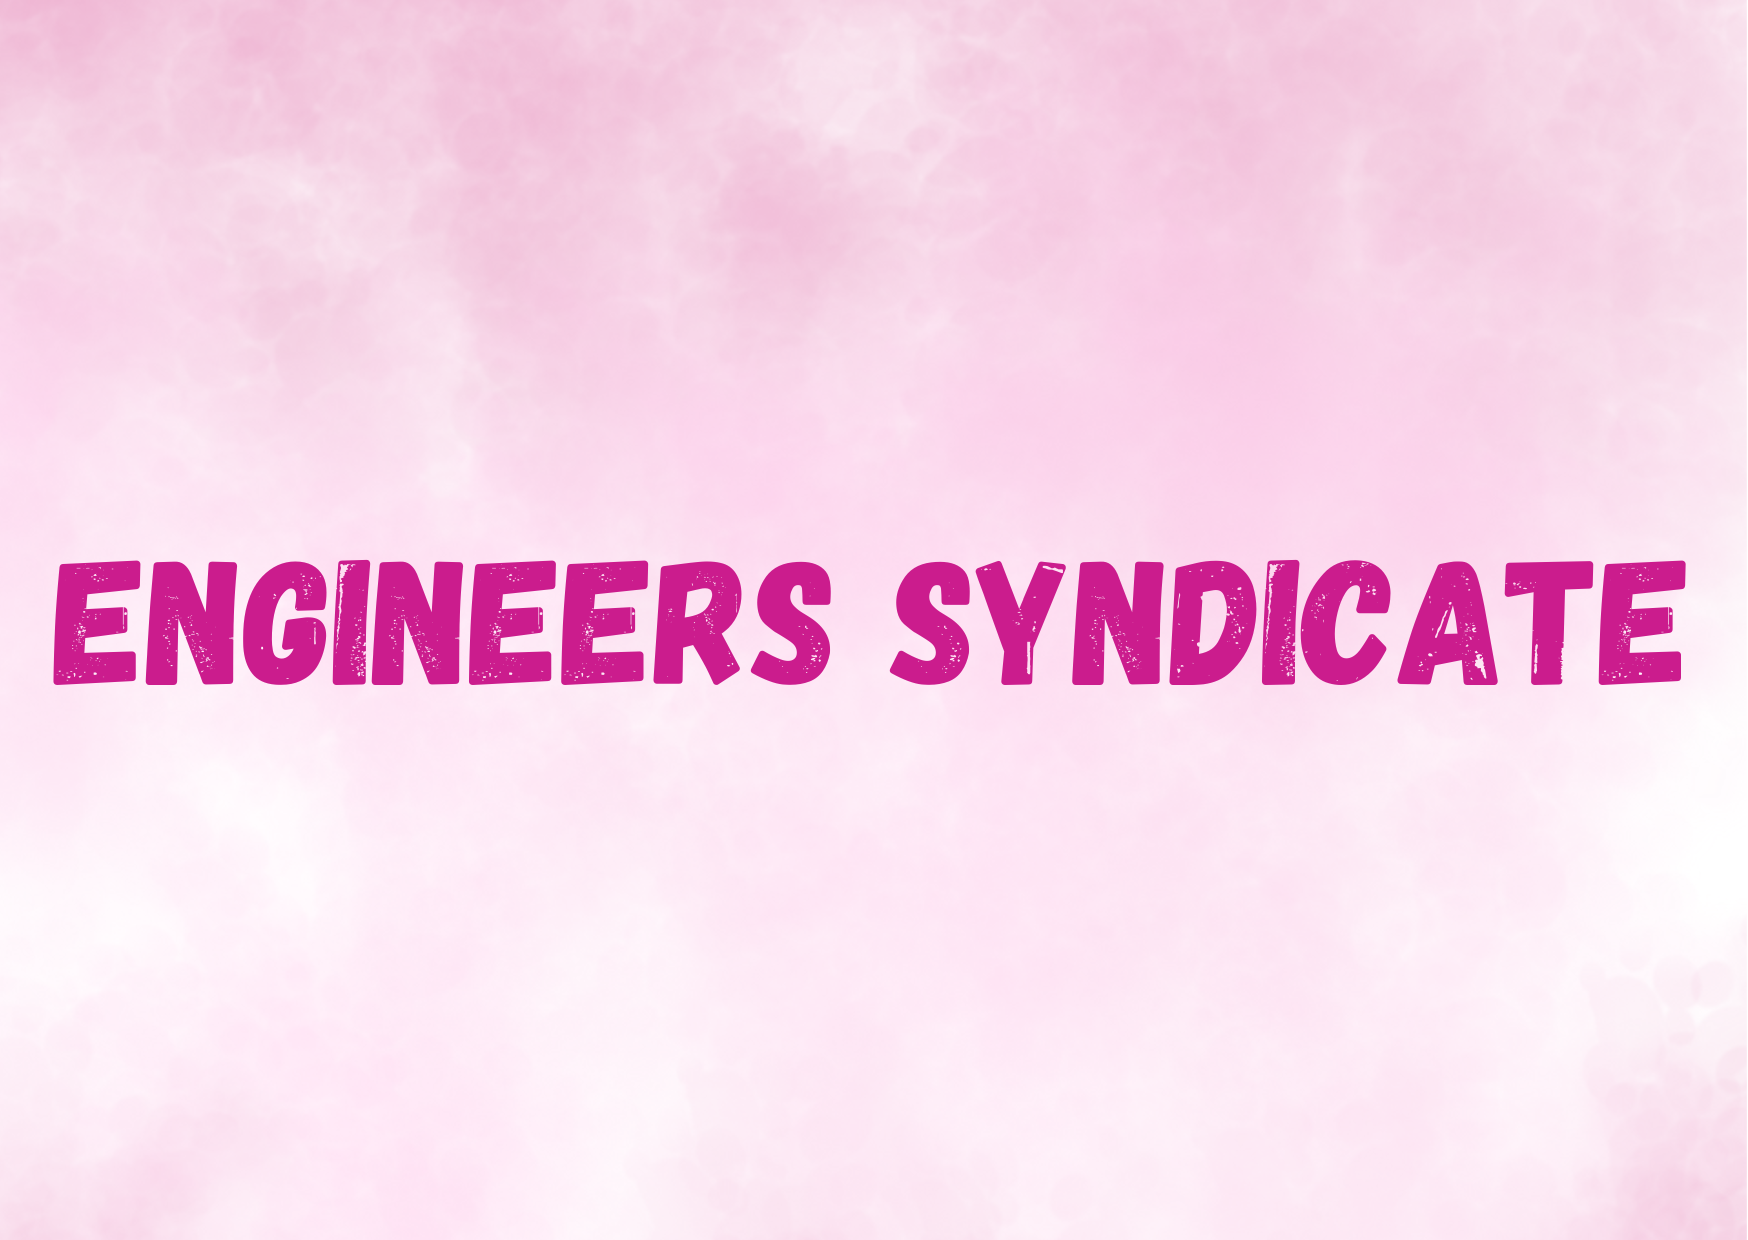  Engineers Syndicate,   